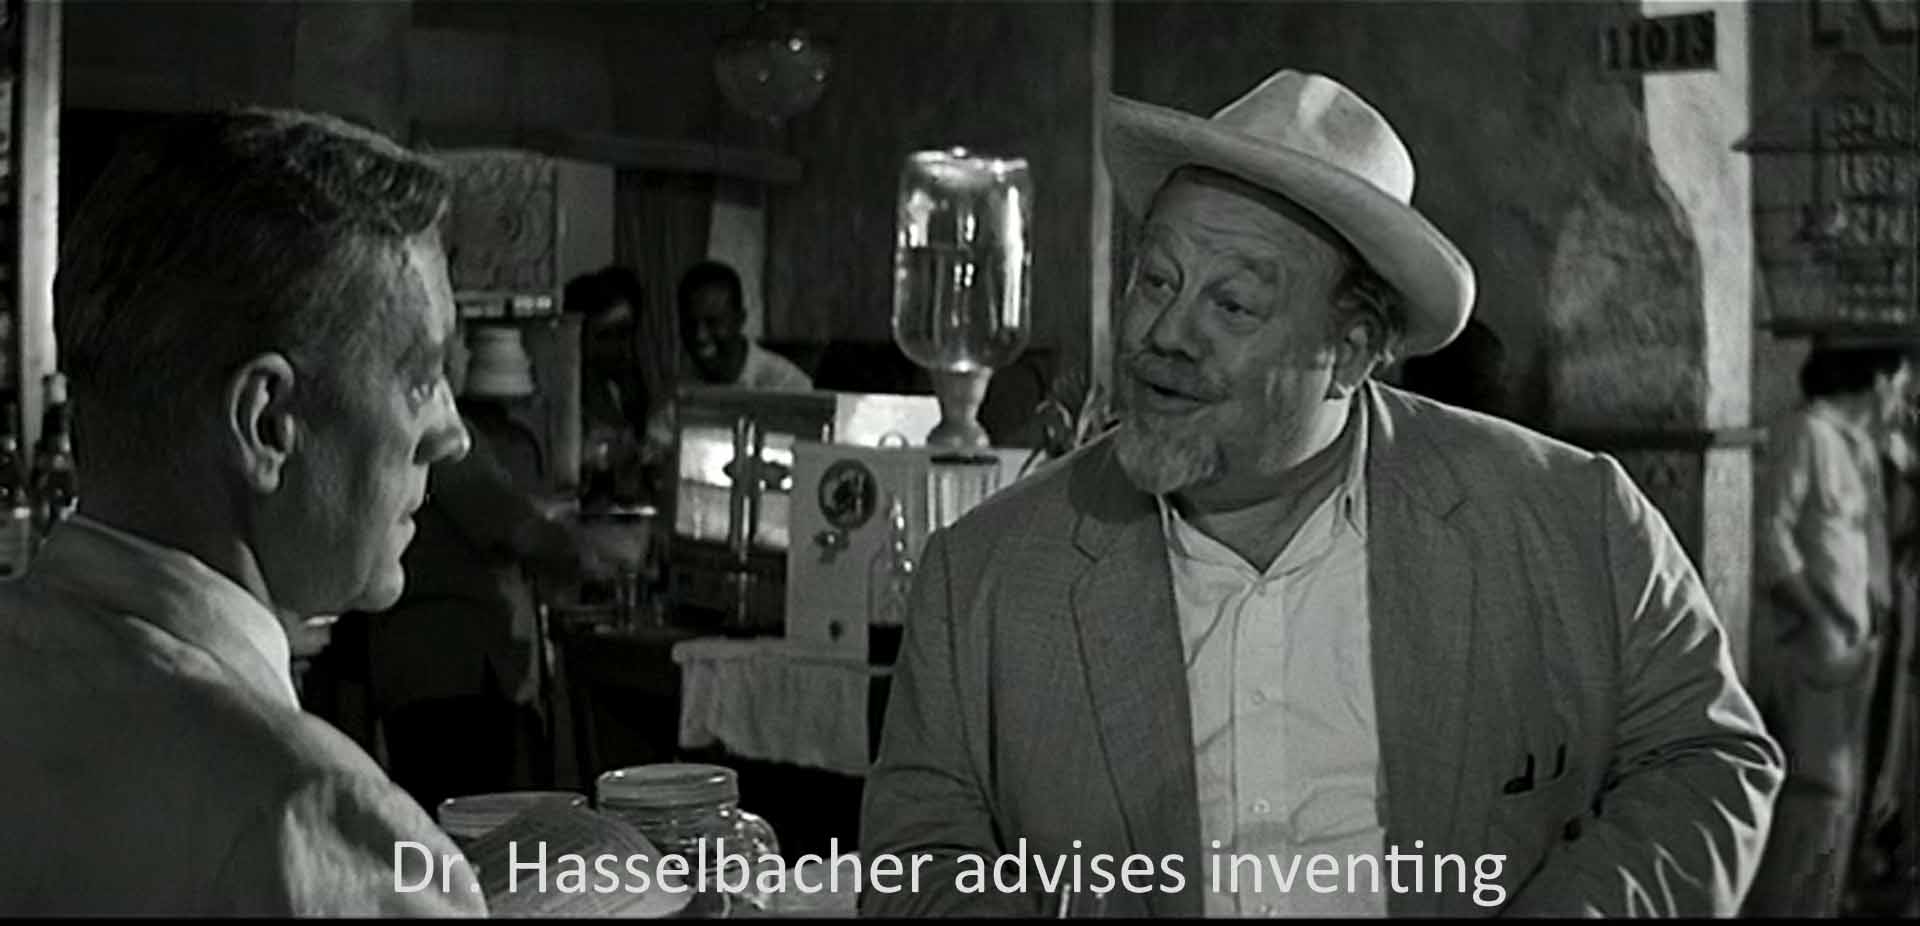 Dr. Hasselbacher advises inventing